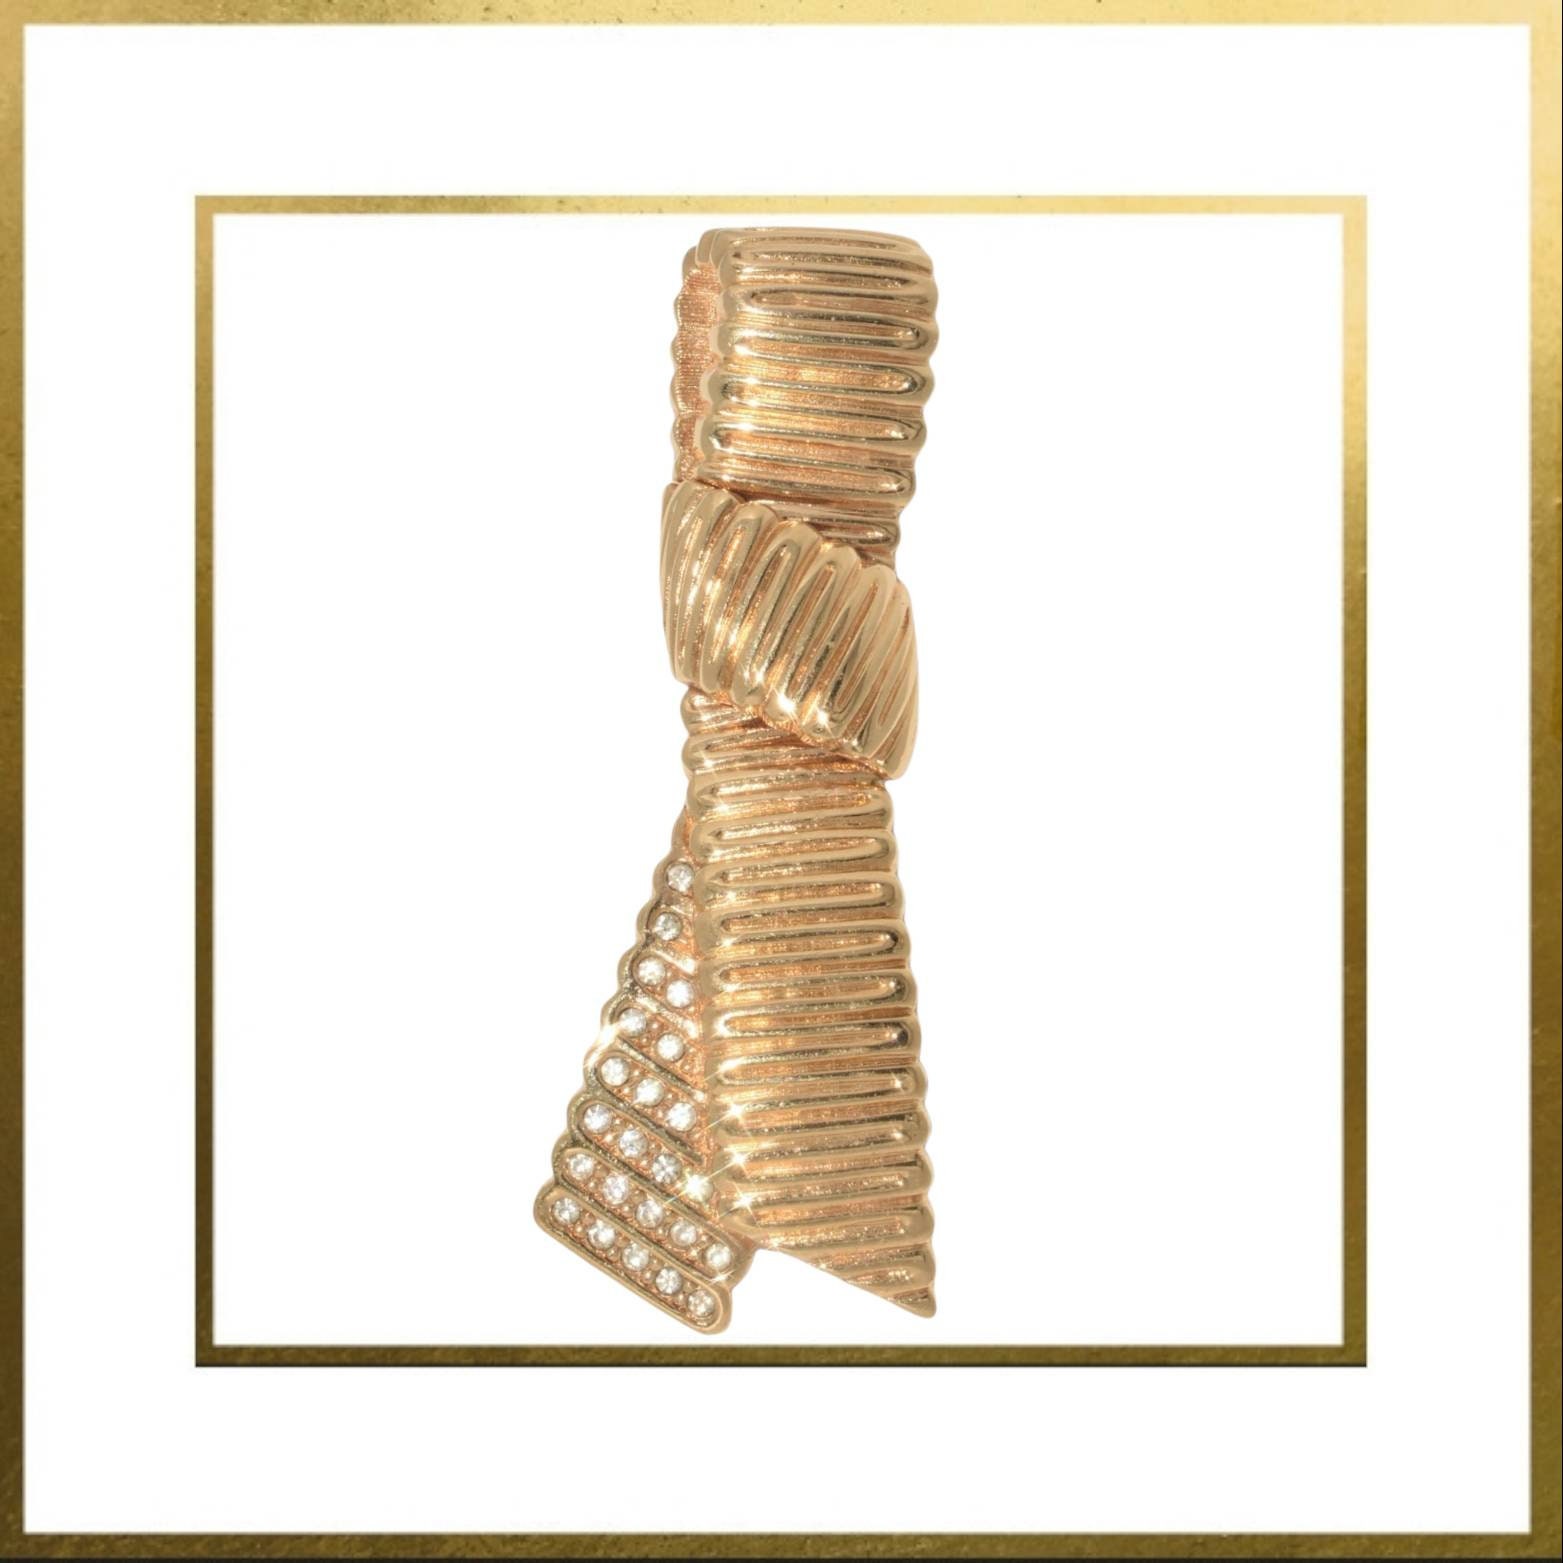 Rare Vintage Christian Dior Rope Bow Ties Gold Tone Pin Brooch